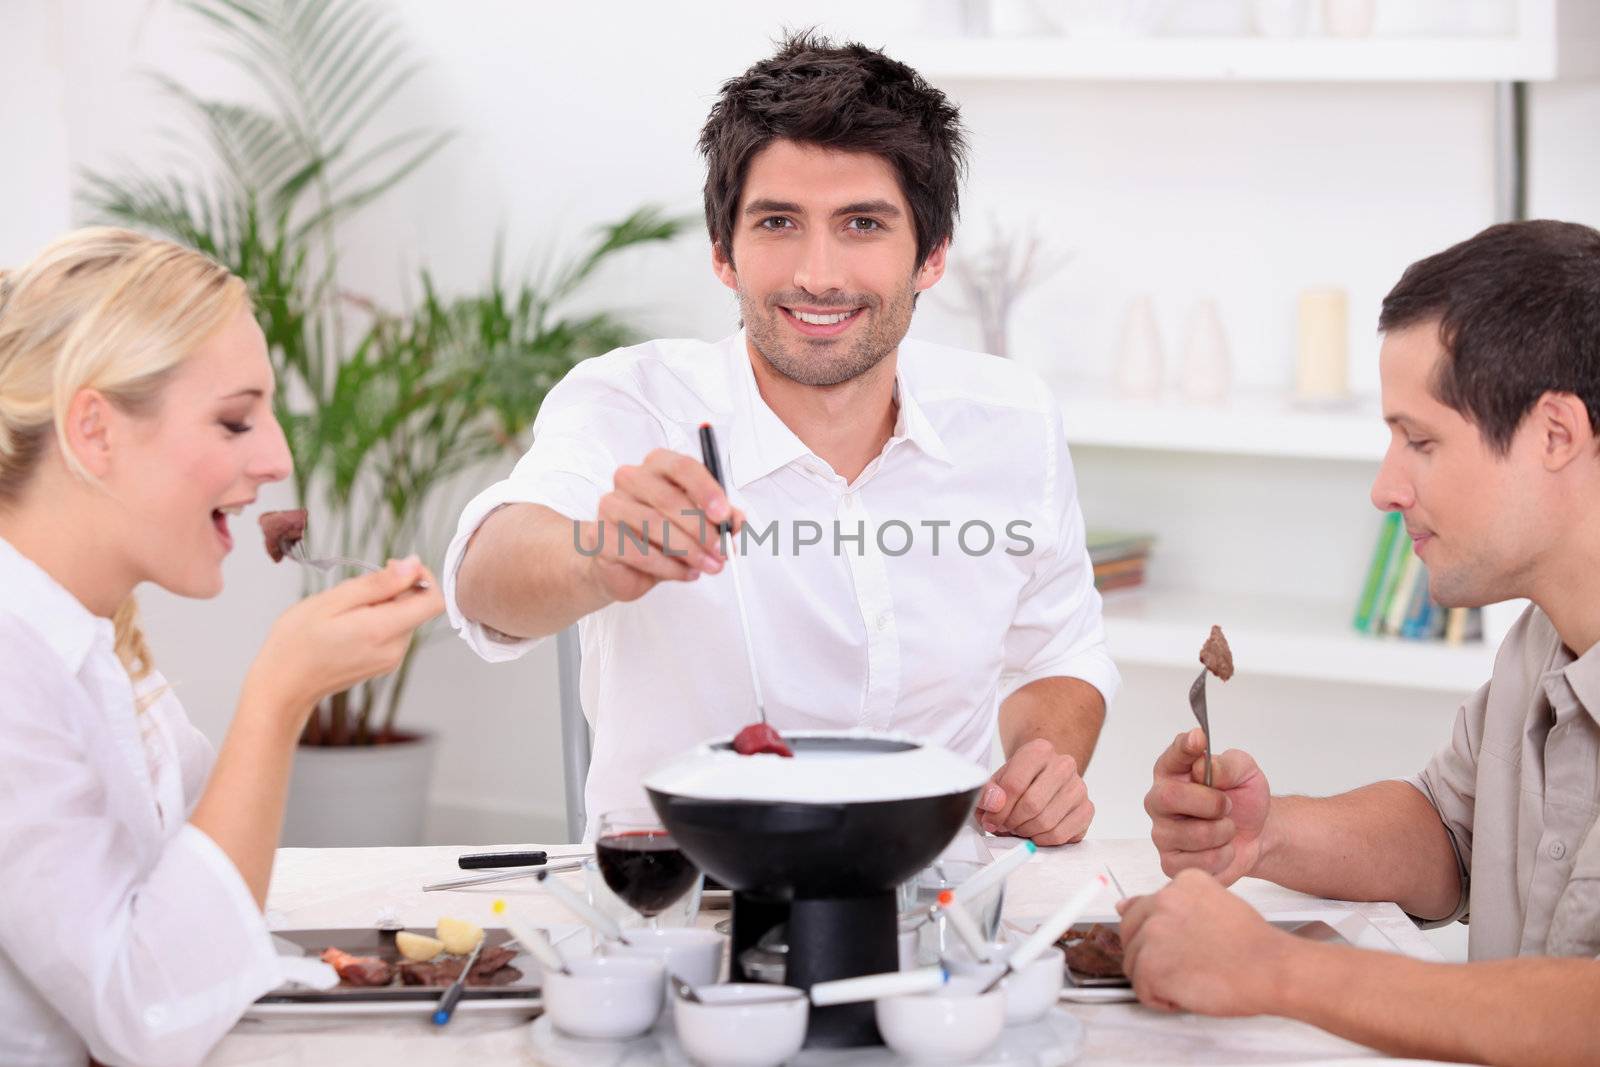 Friends enjoying chocolate fondue by phovoir